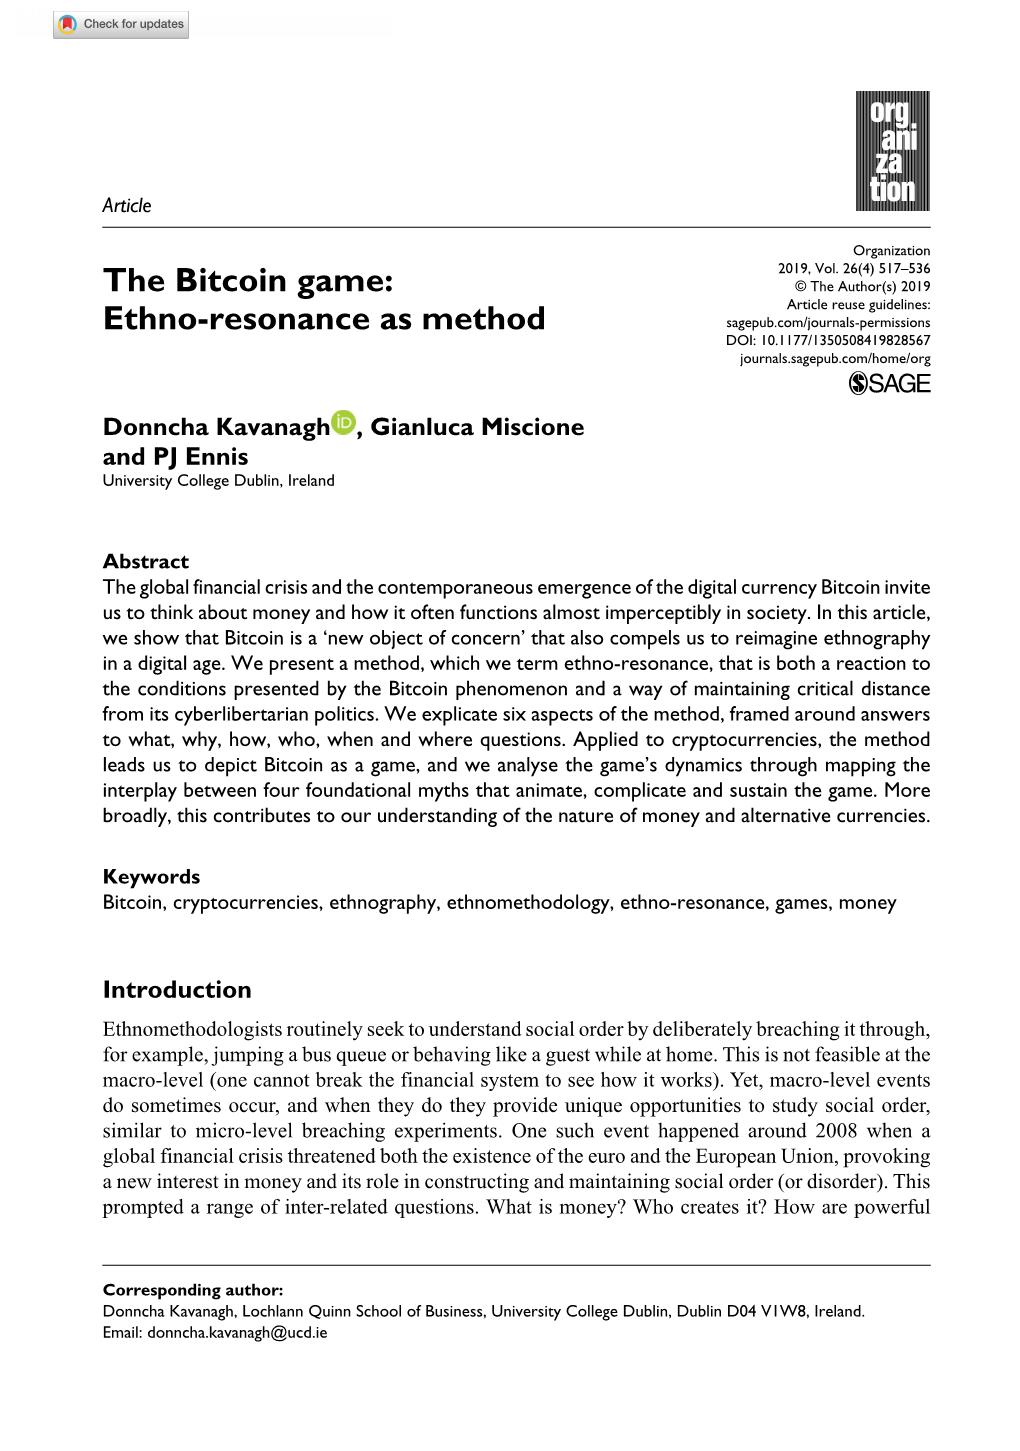 The Bitcoin Game